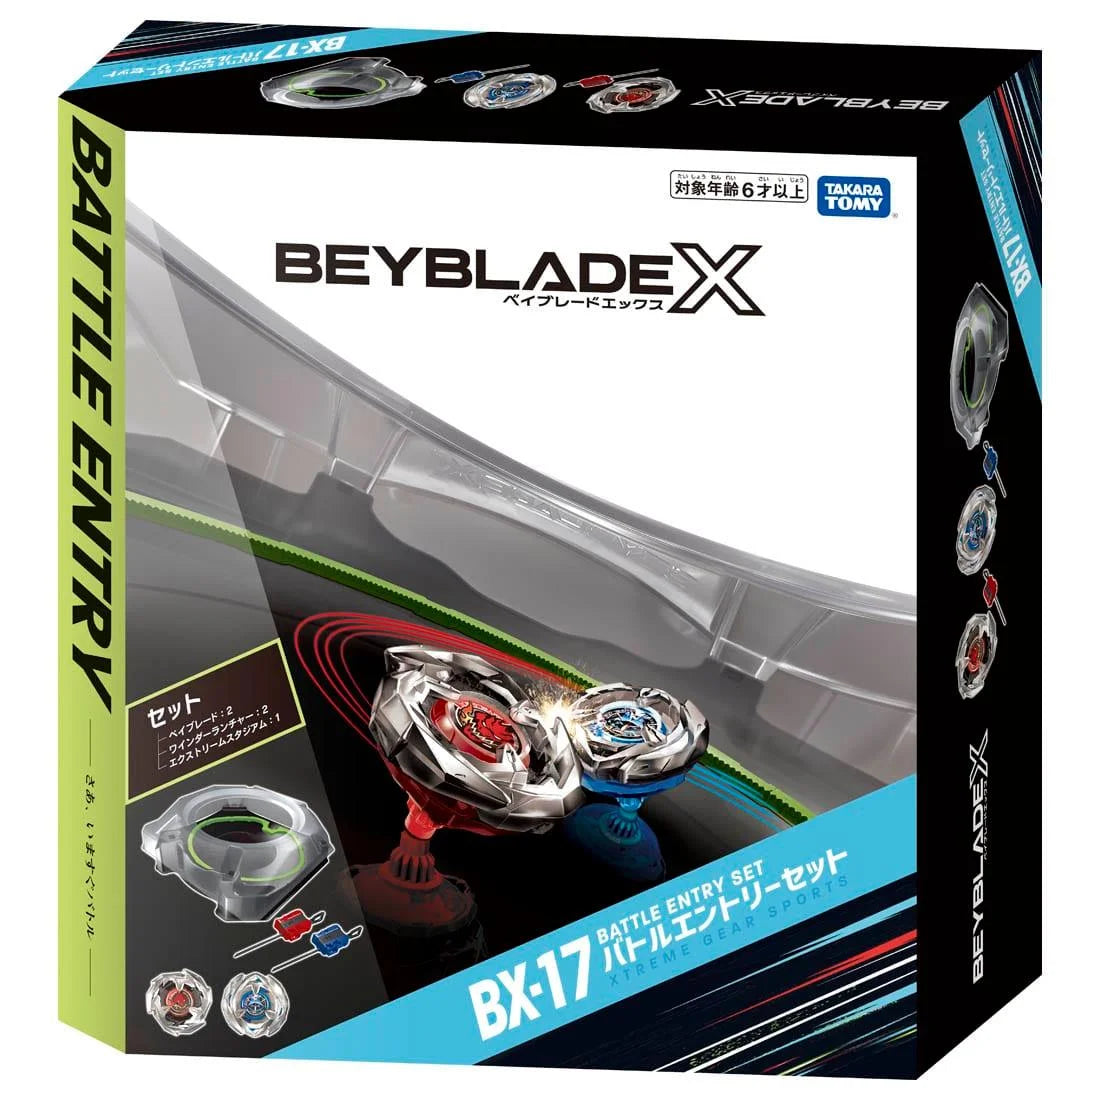 Box pack of BX 17 Beyblade X